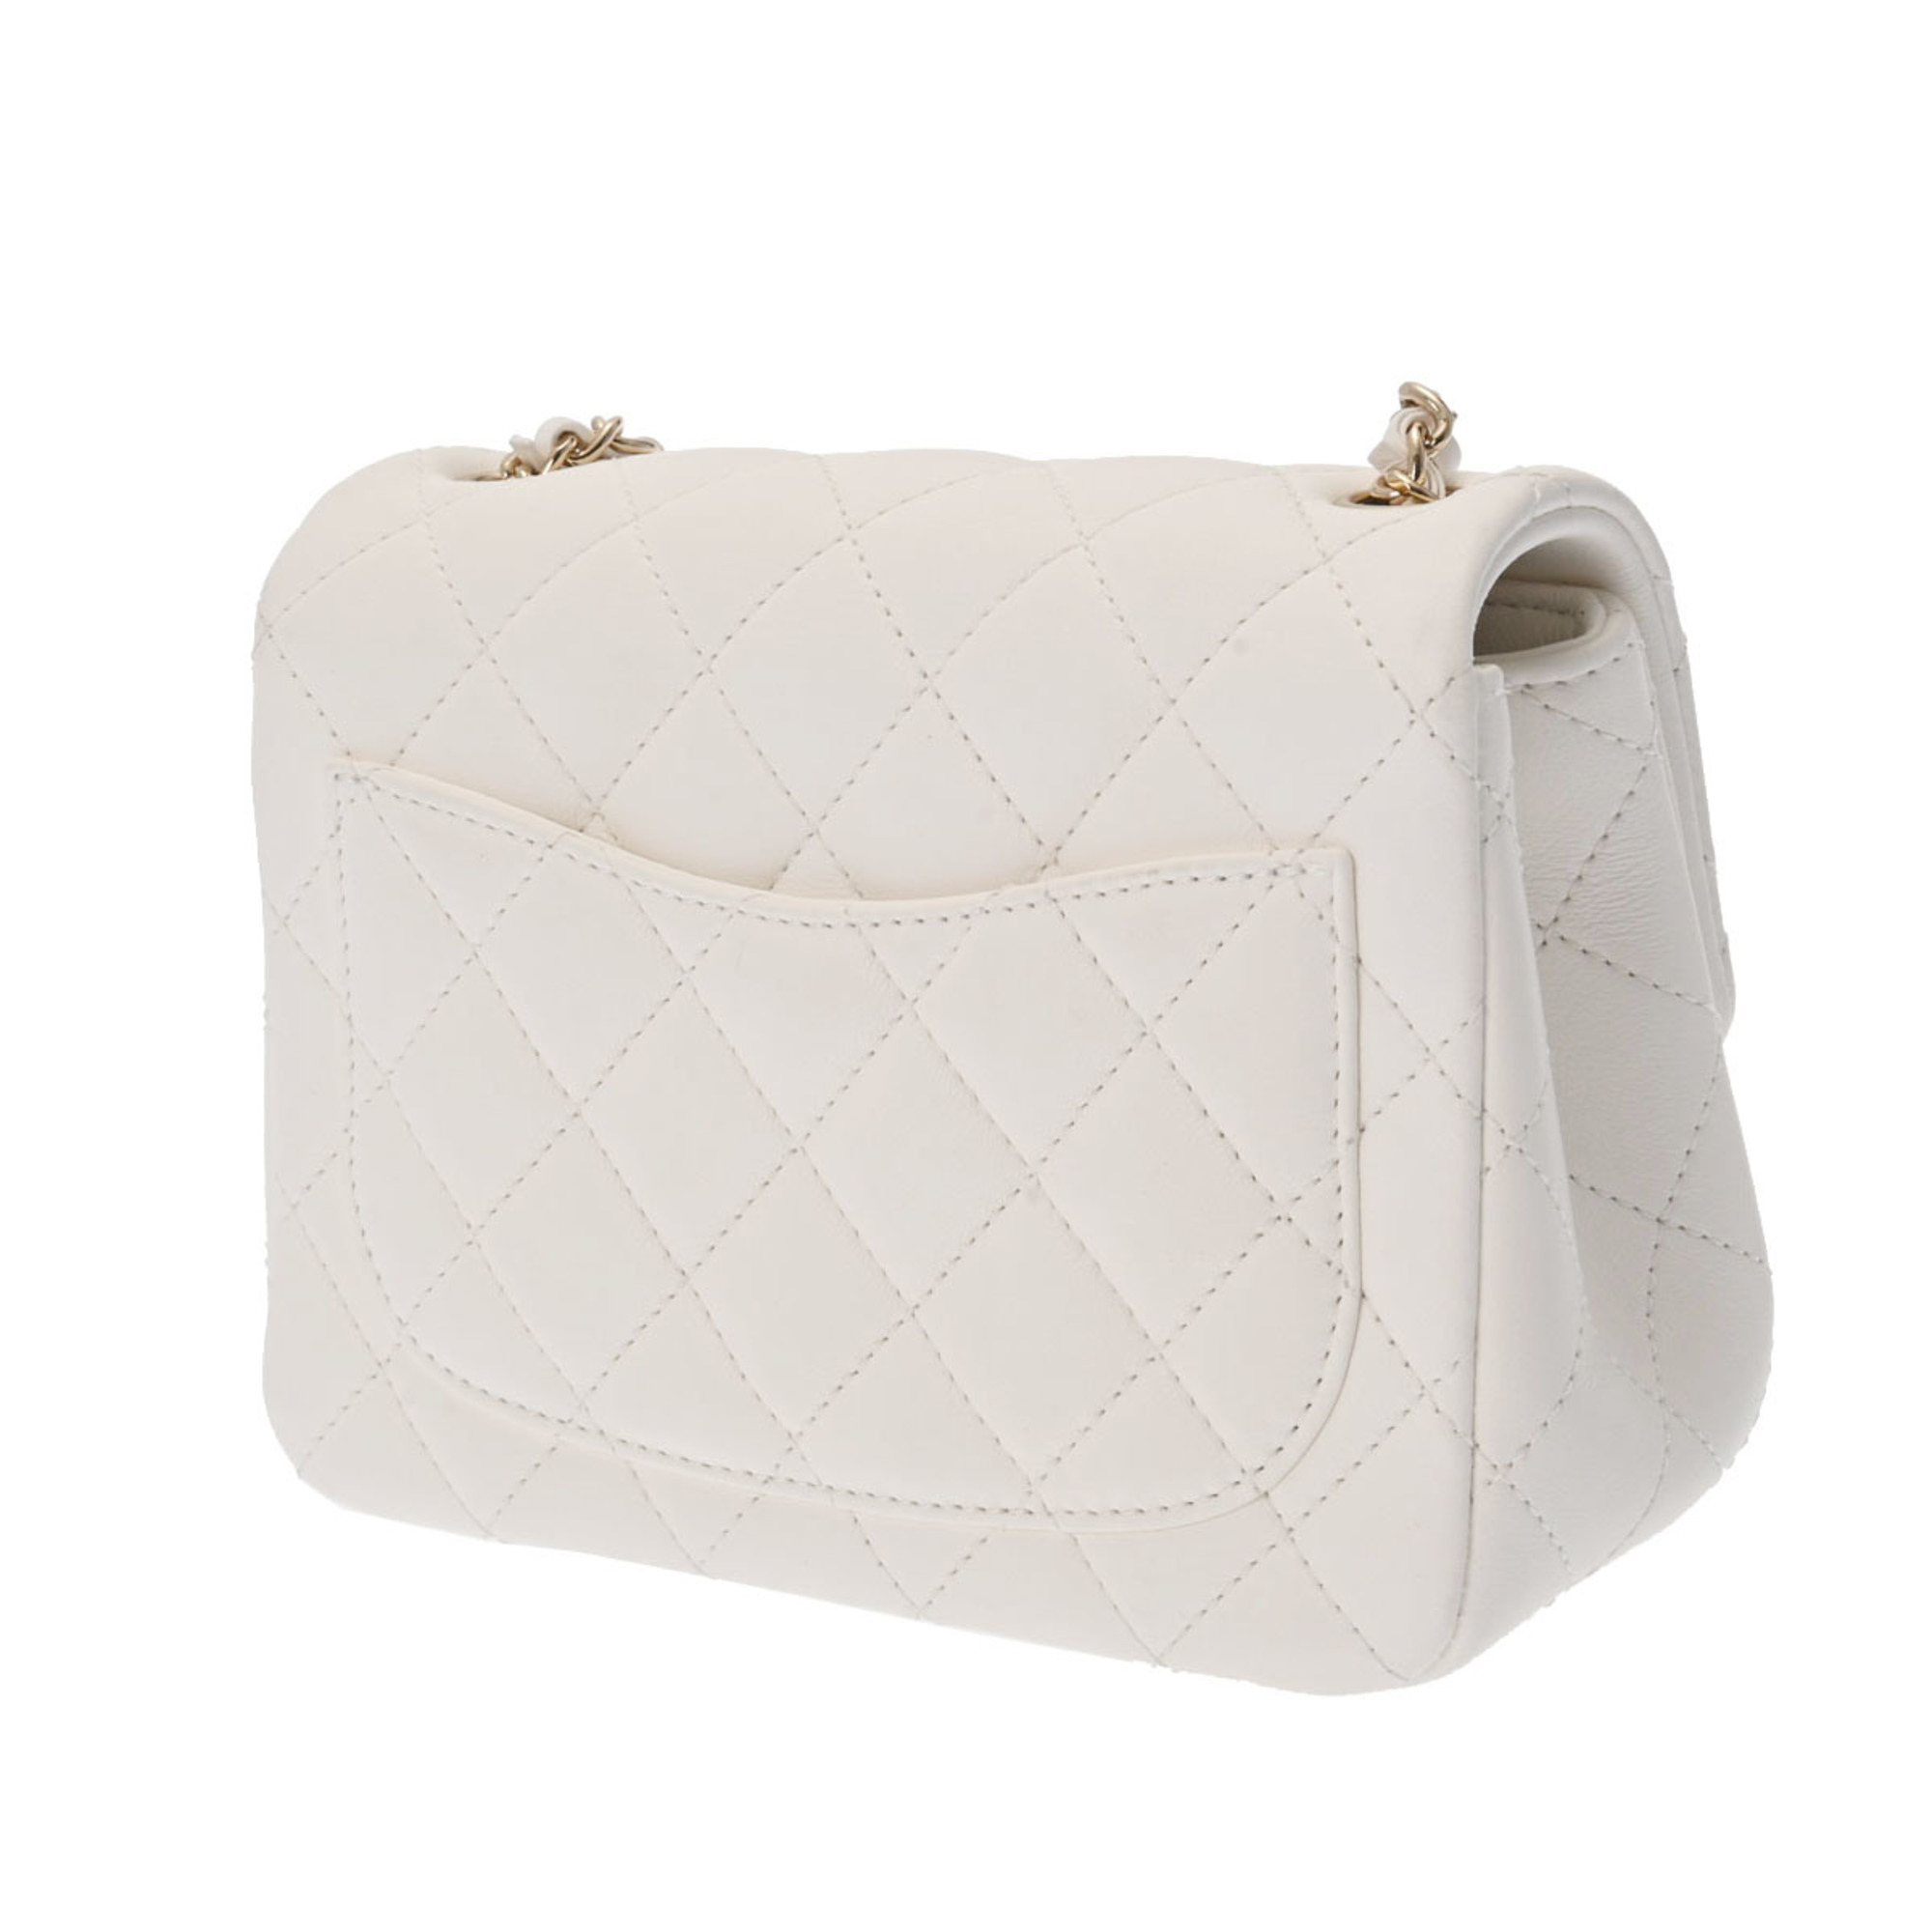 CHANEL Chanel Matelasse Chain Shoulder Coco Ball White Champagne Women's Lambskin Bag